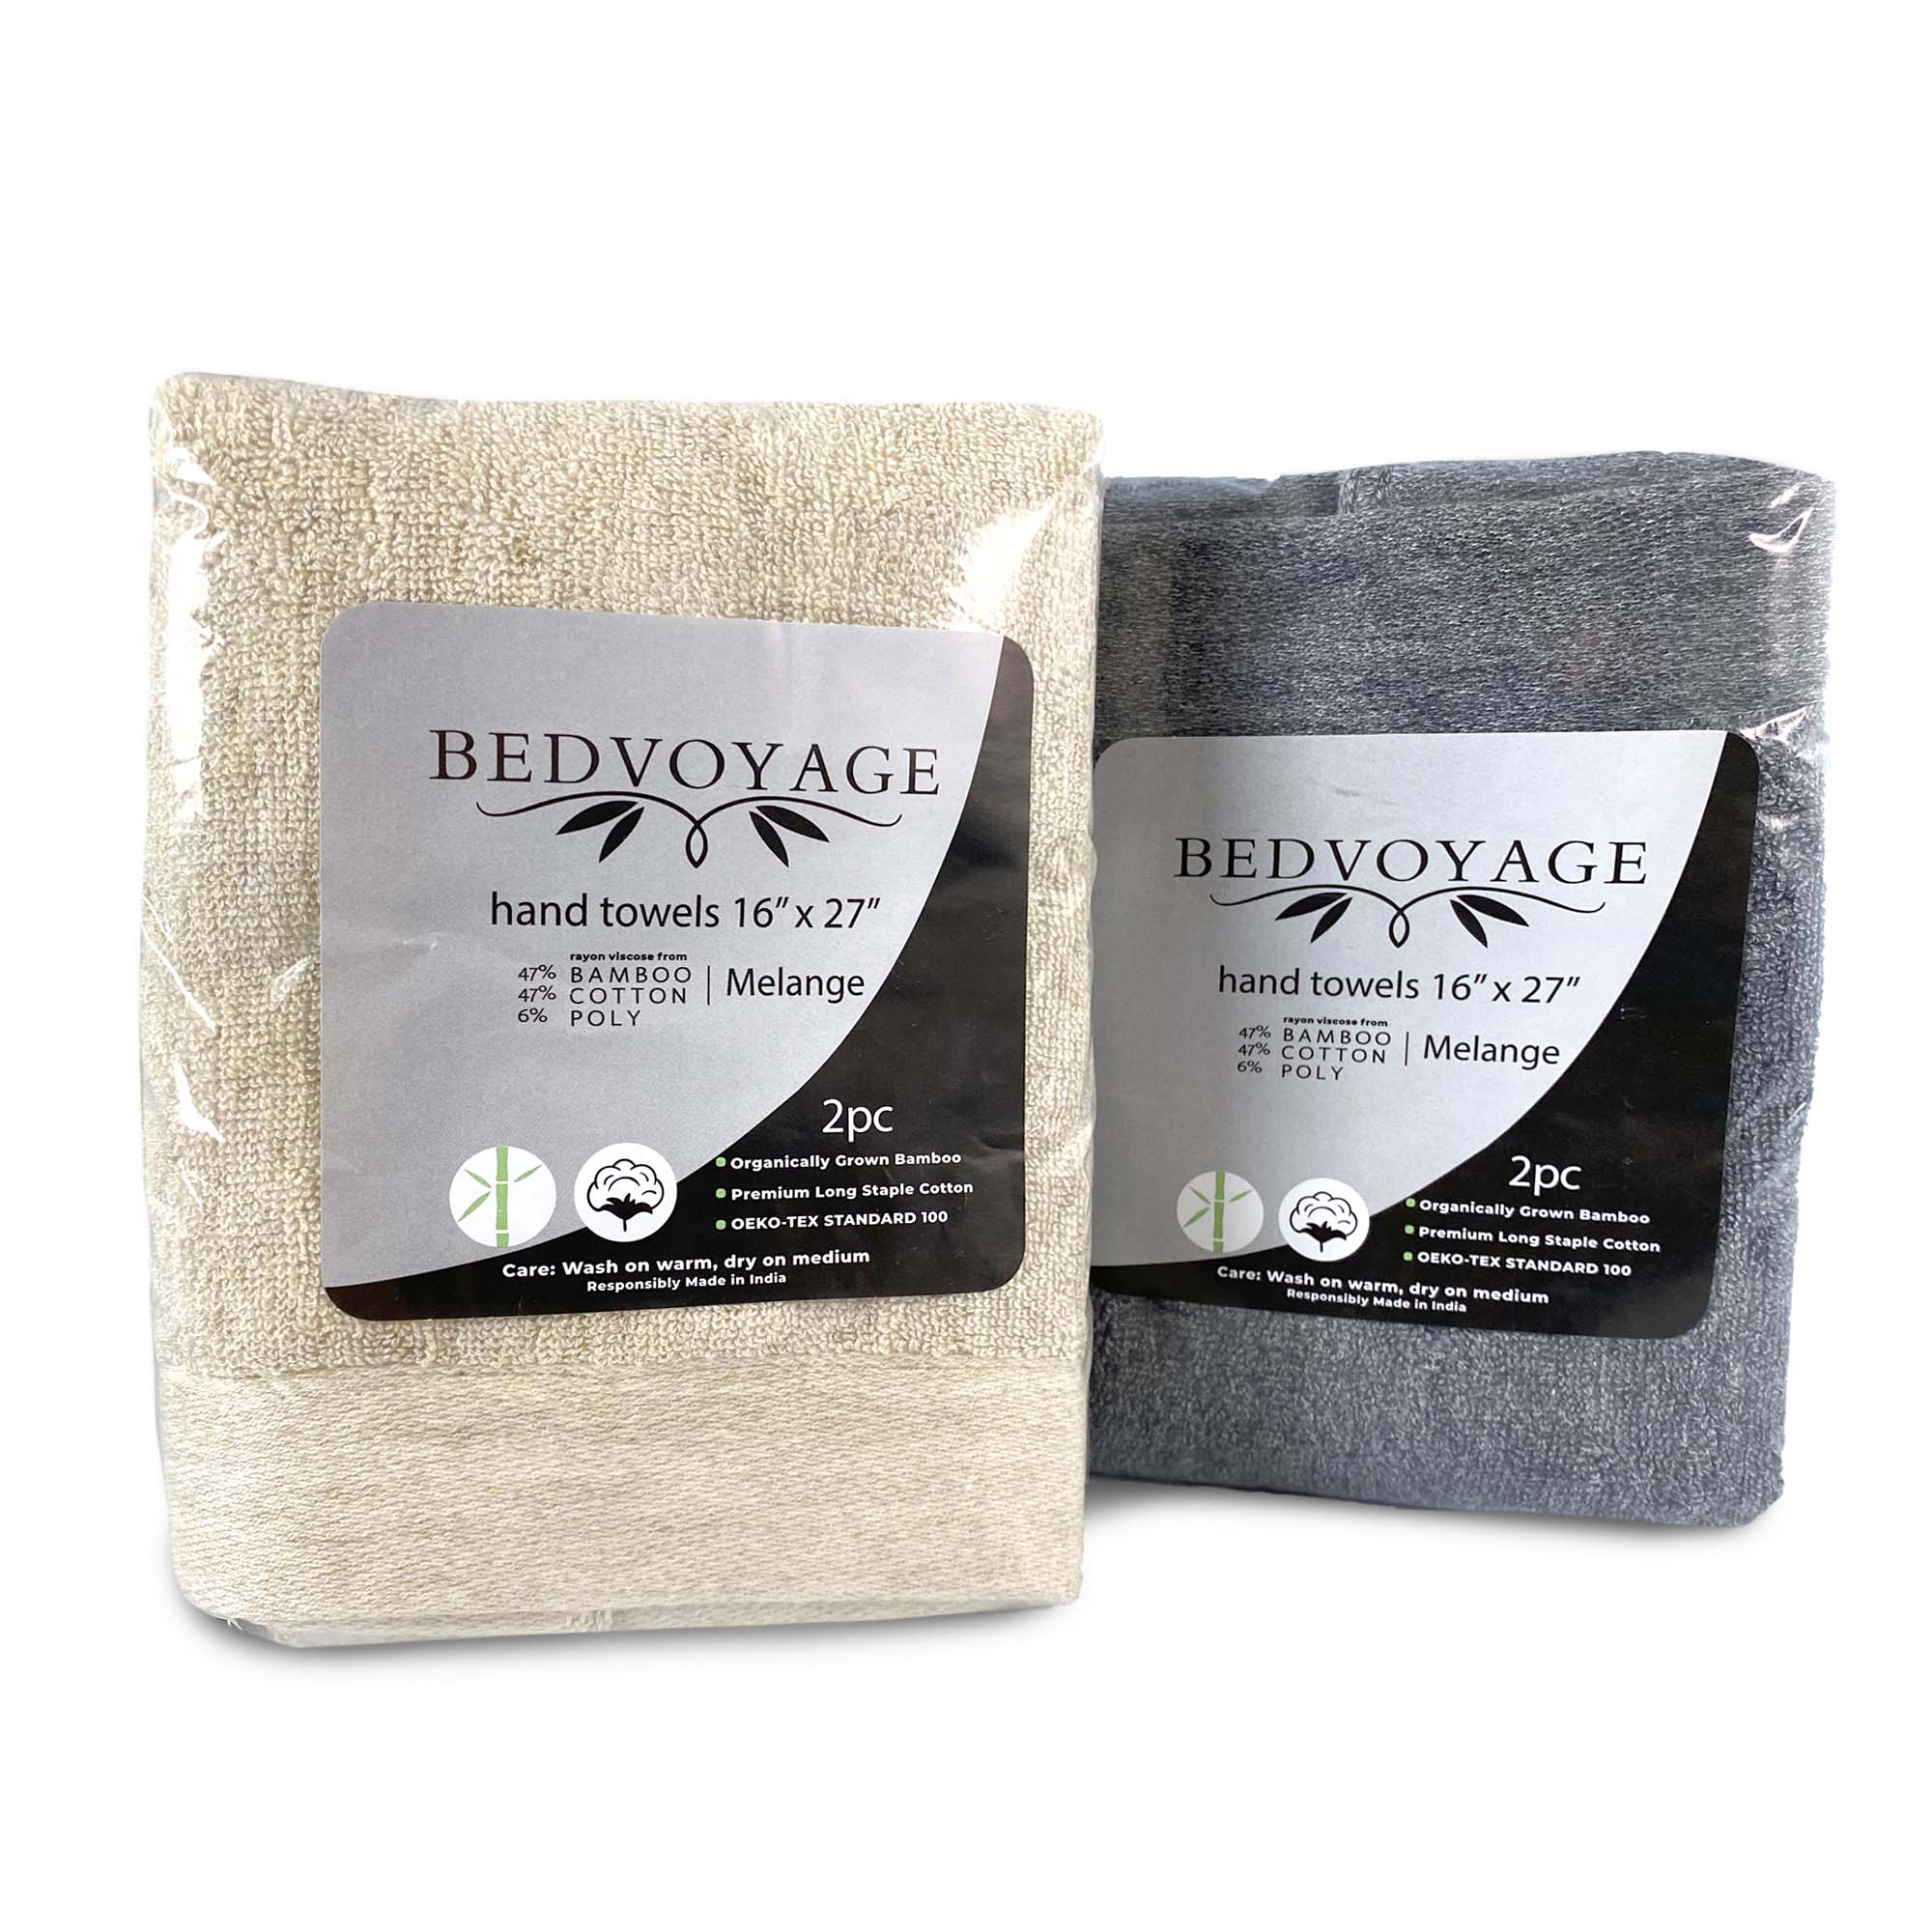 BedVoyage Melange viscose from Bamboo Cotton Bath Sheet - On Sale